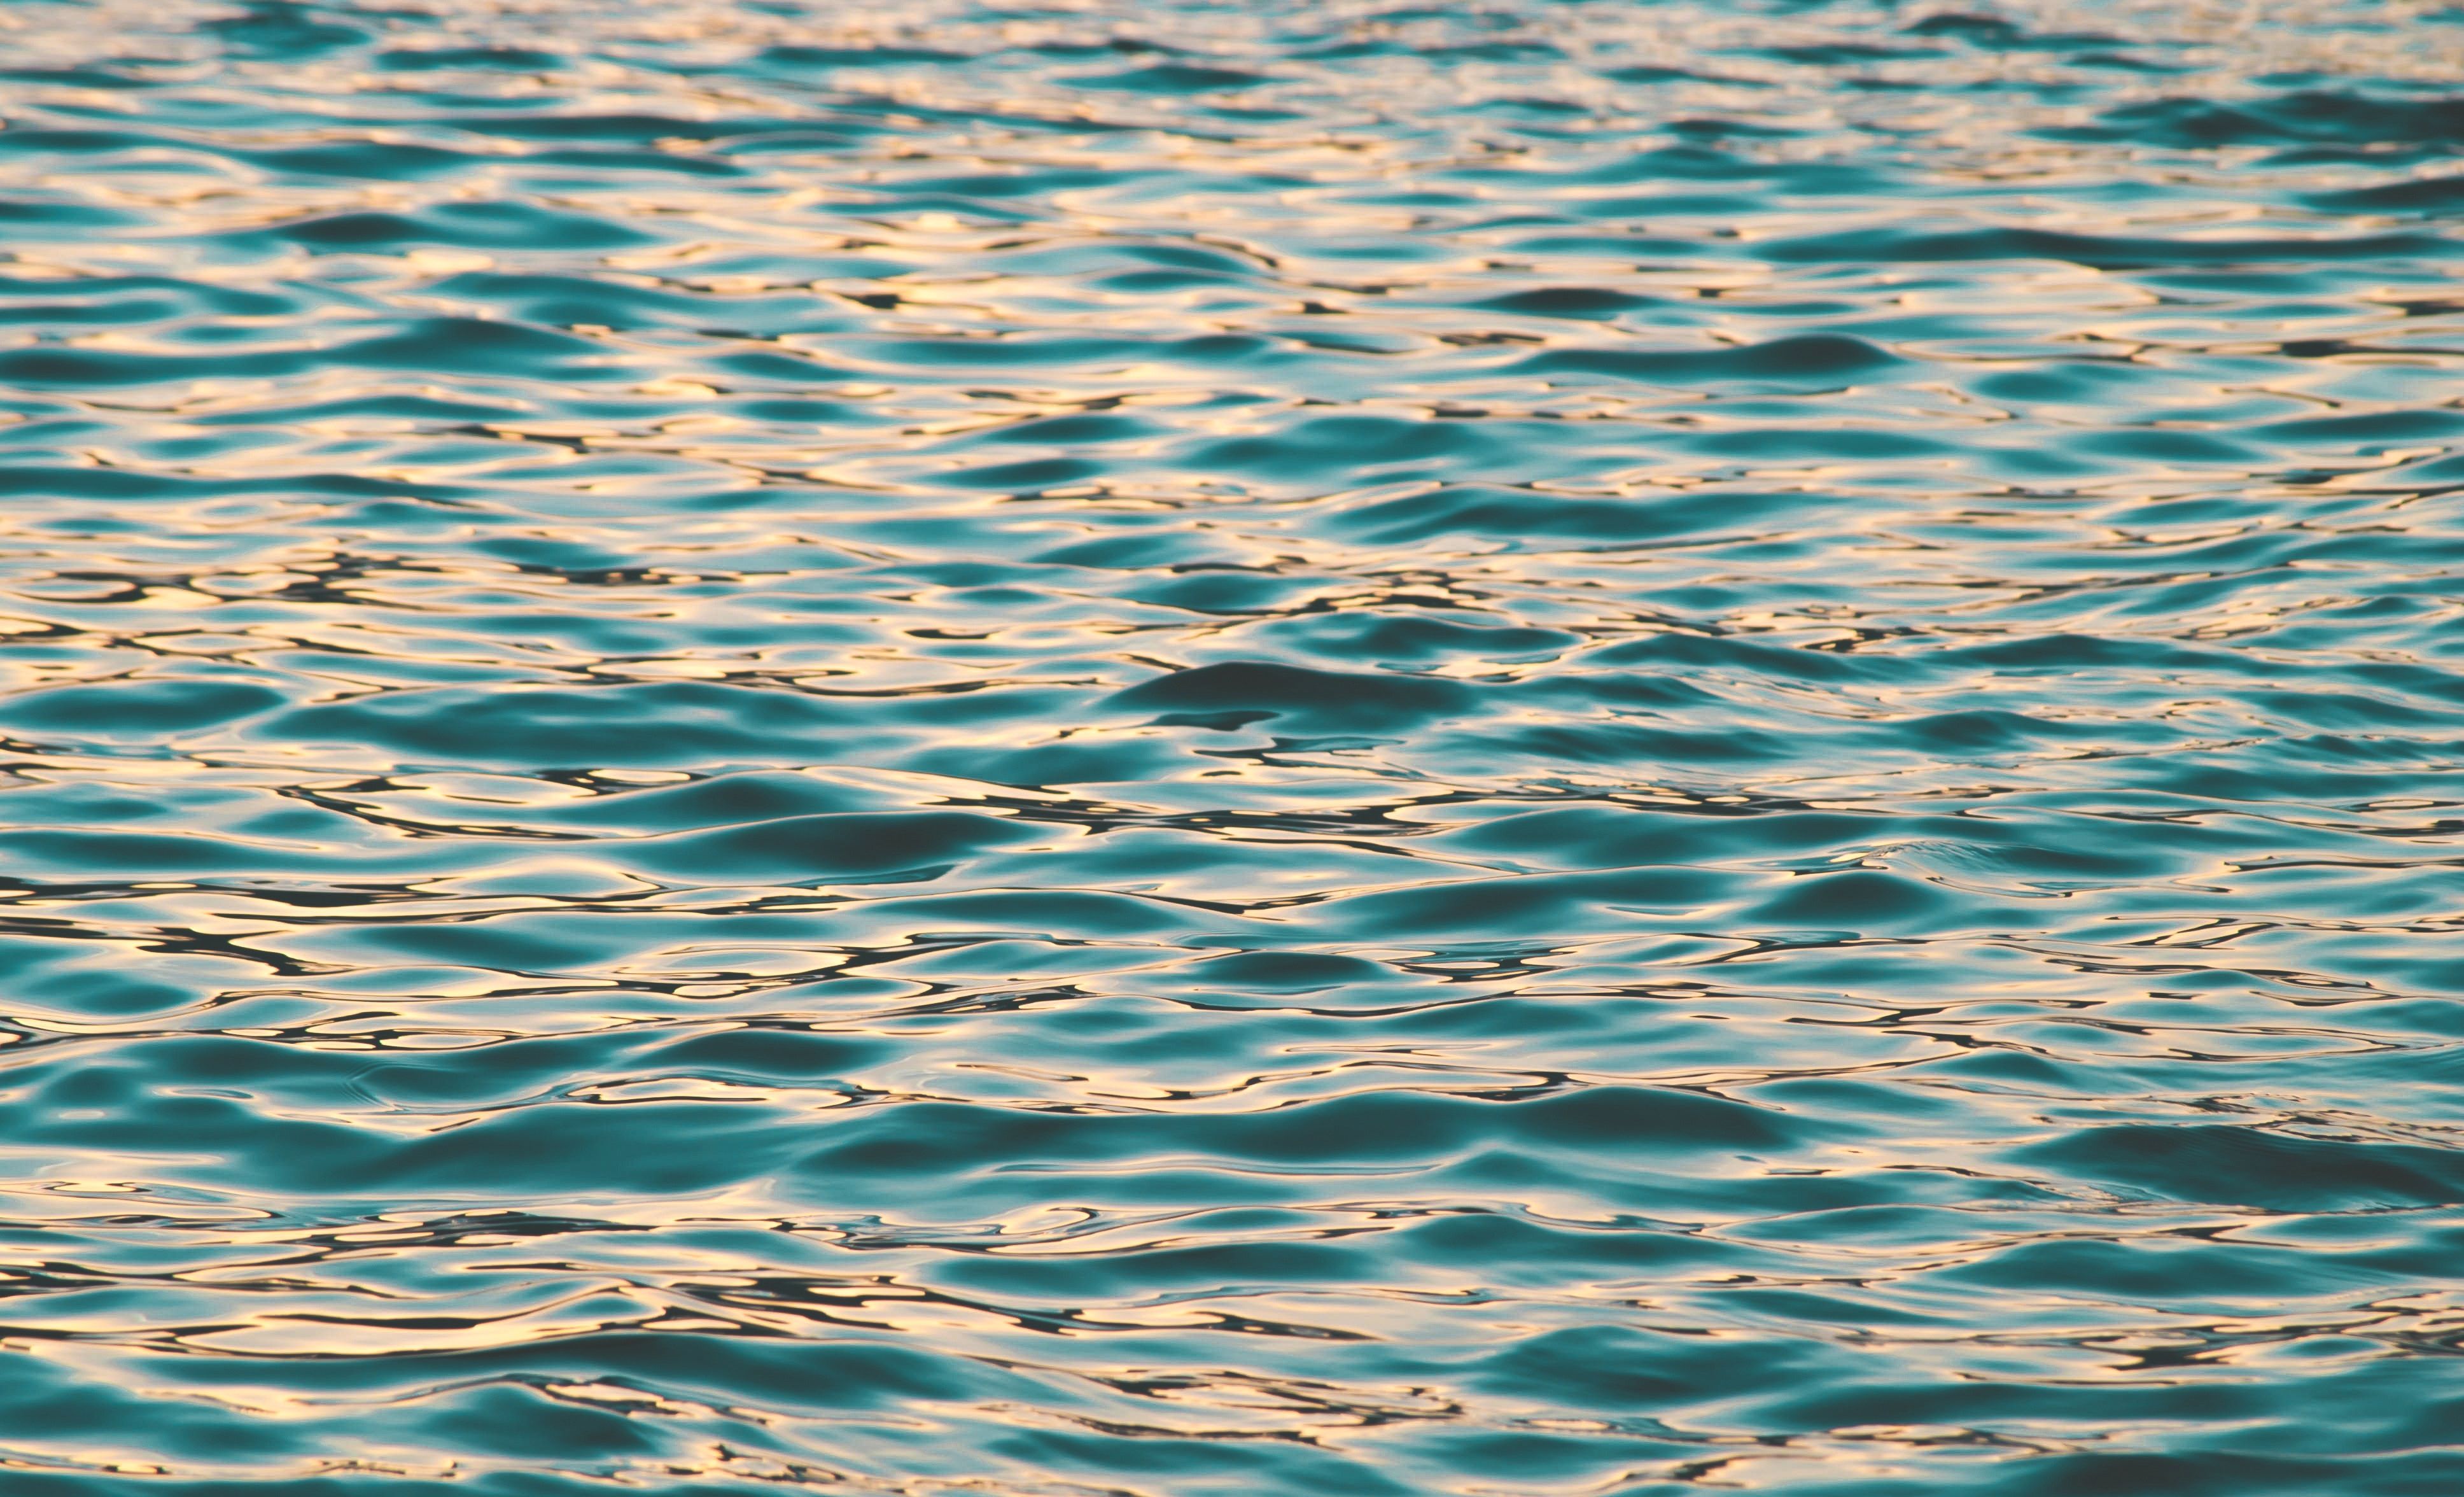 3872x2352 wafe, sunset, summer, minimal, hd, sea, ripple, blue, reflection, aesthetic, orange, Public domain image, water Gallery HD Wallpaper